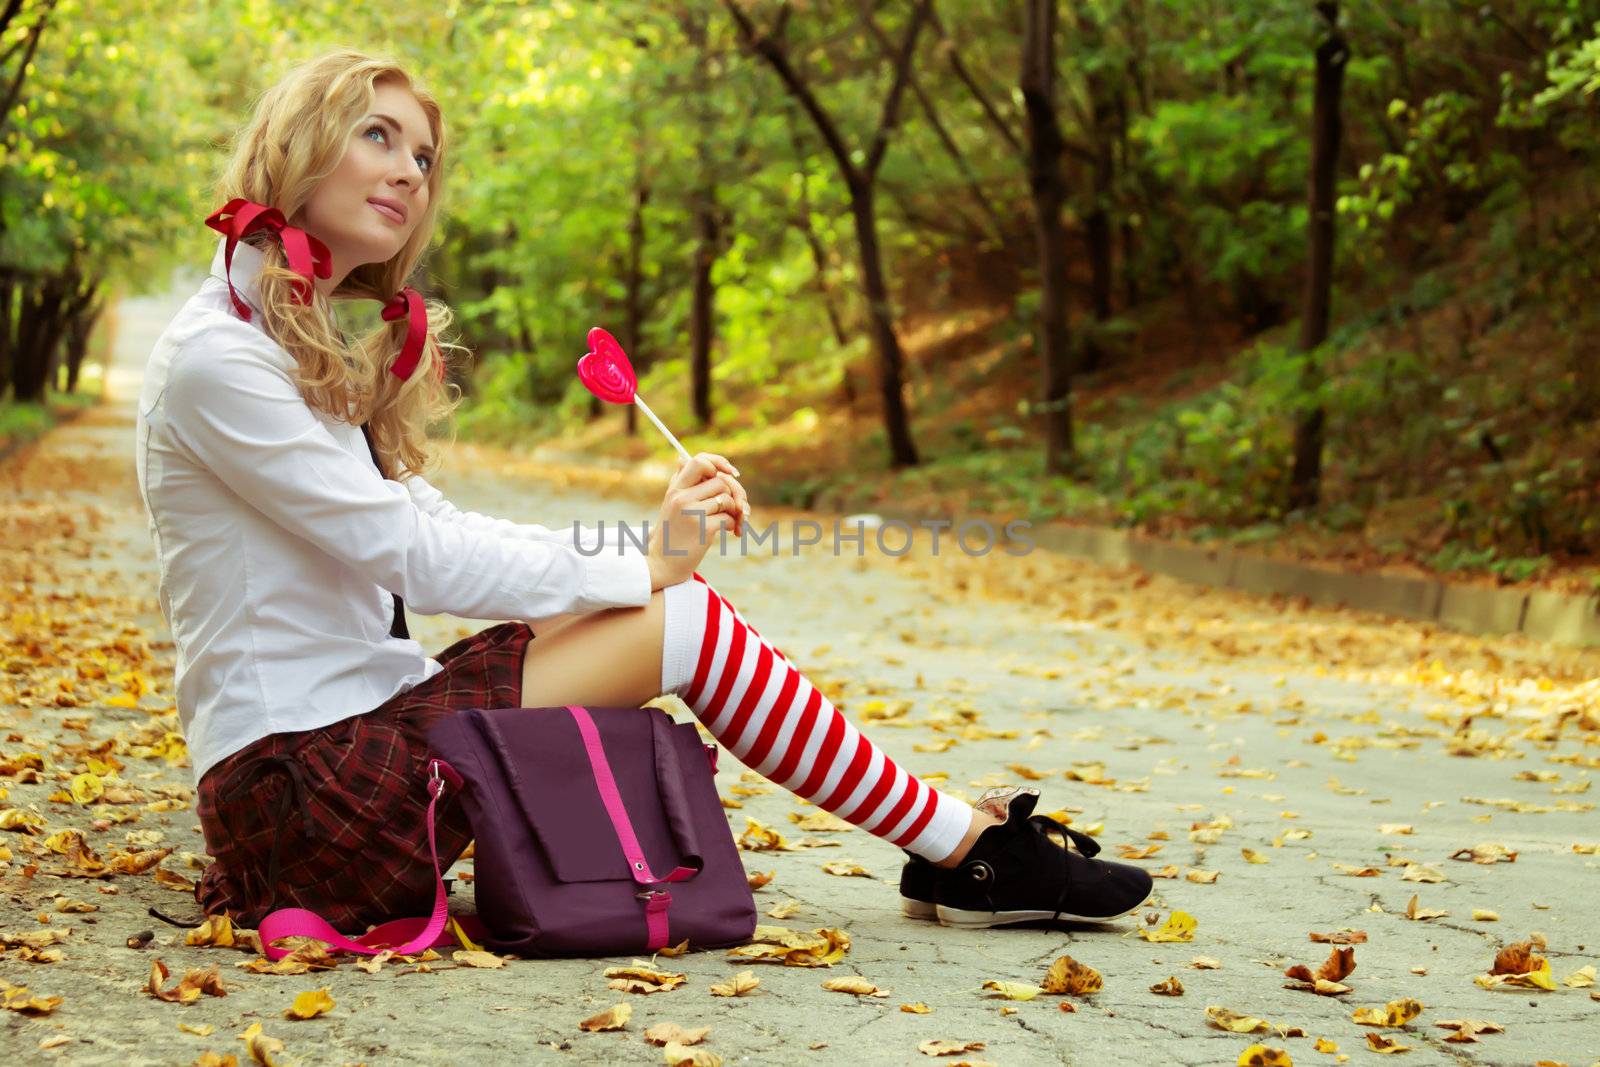 Dreaming schoolgirl sitting in autumn park